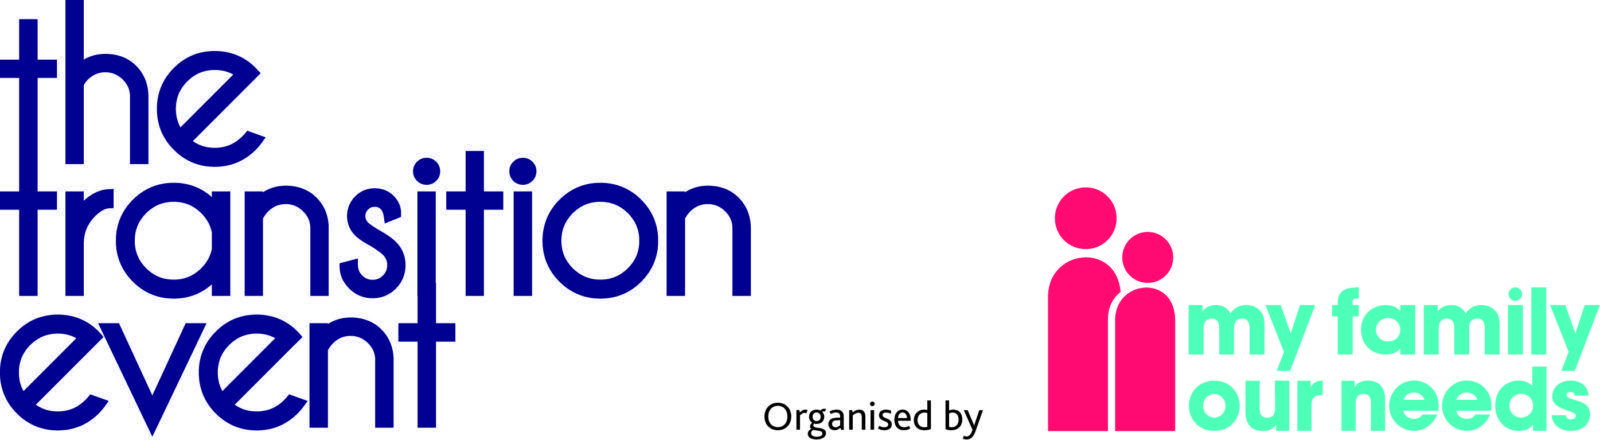 Tte Logo - TTE-16-Logo-MFON-Blue | Dyslexic.com